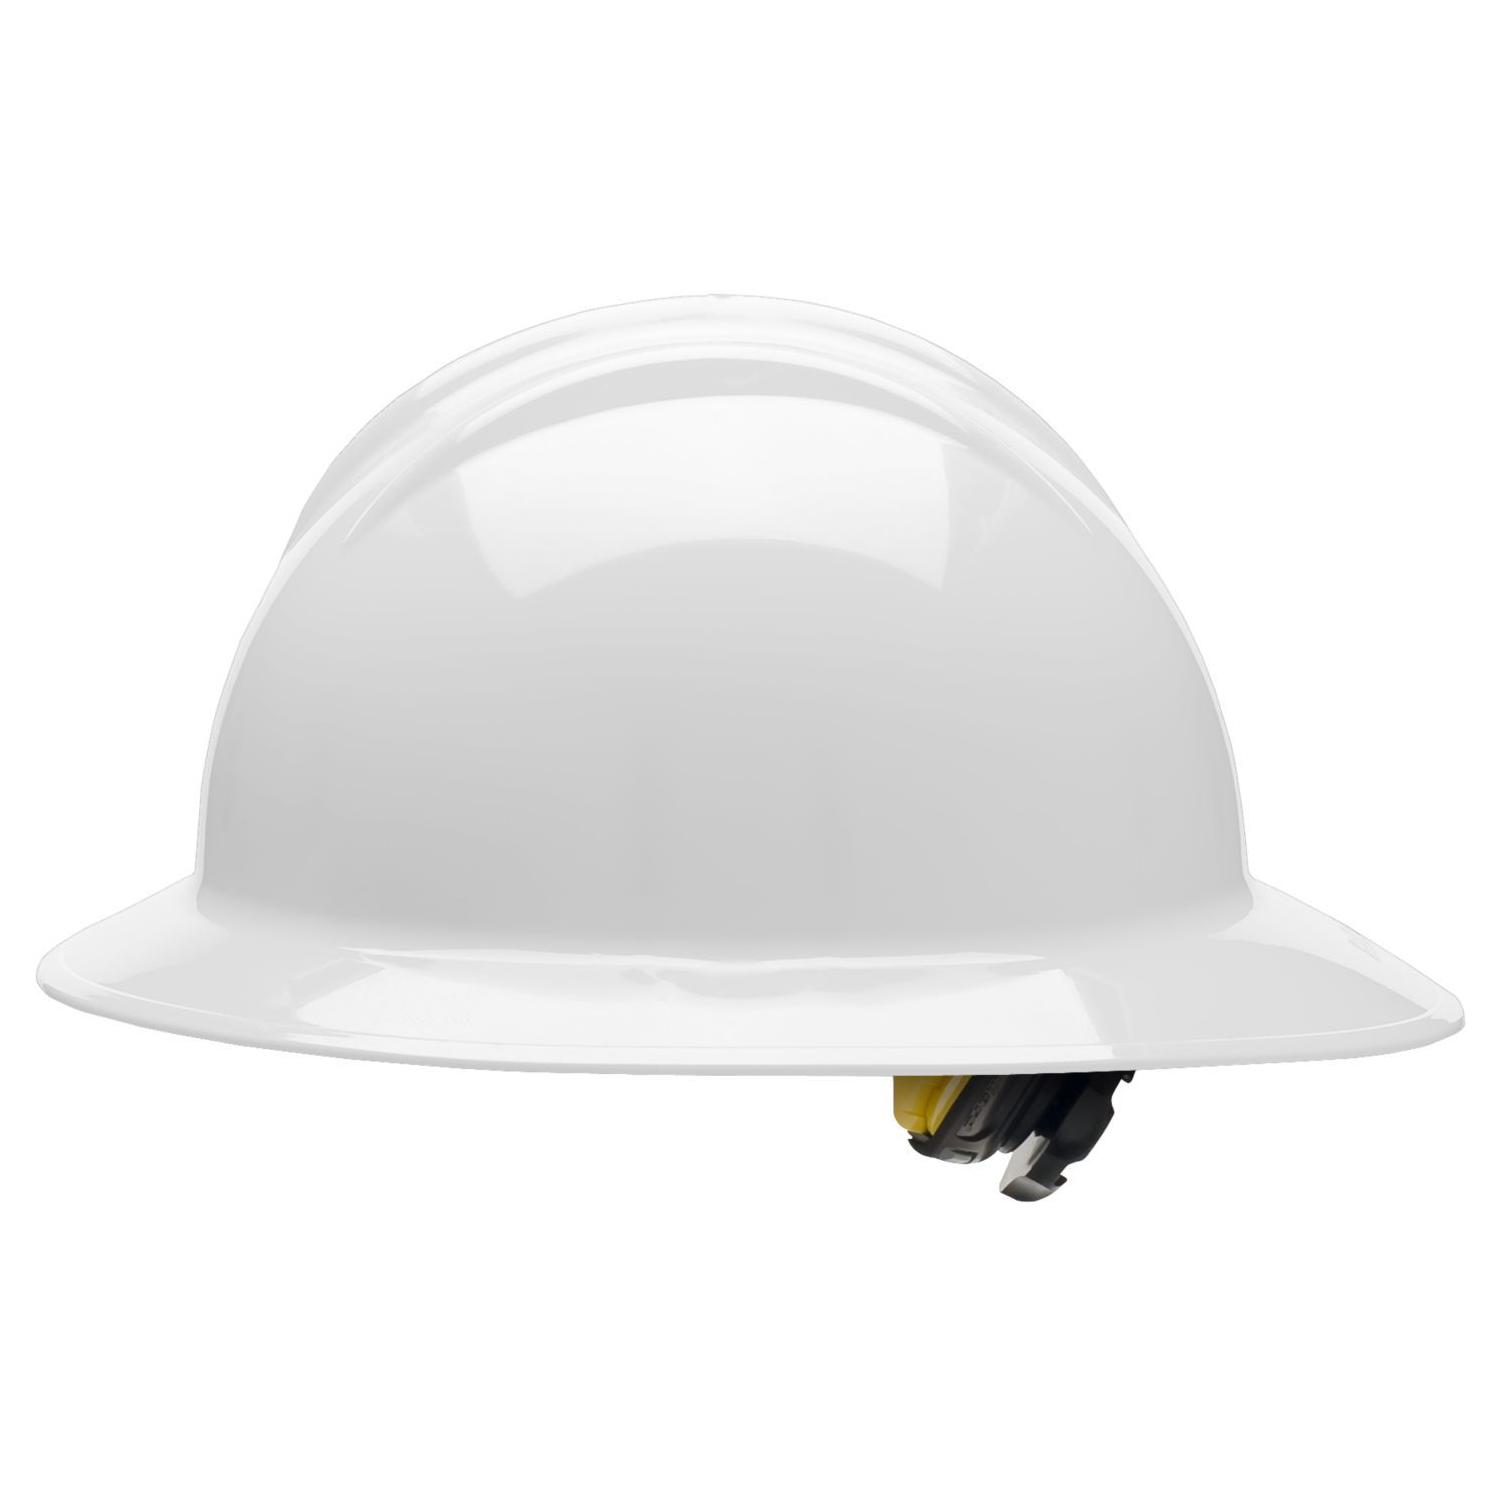 One Size Bullard 33WHR Classic Full Brim Style Hard Hat 6 Point Ratchet Suspension White